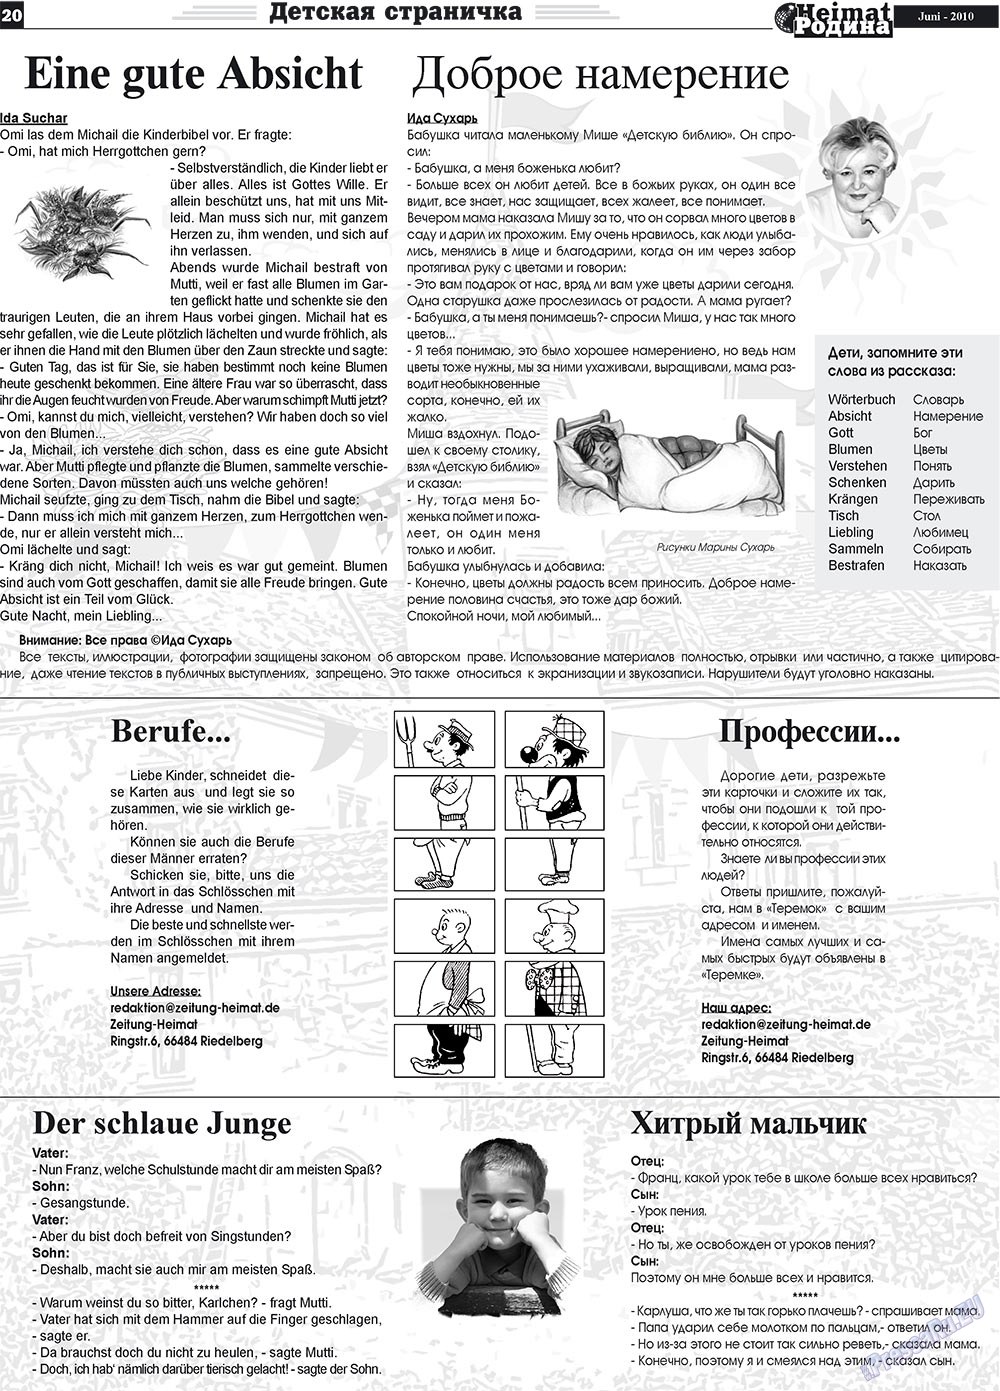 Heimat-Родина, газета. 2010 №6 стр.20